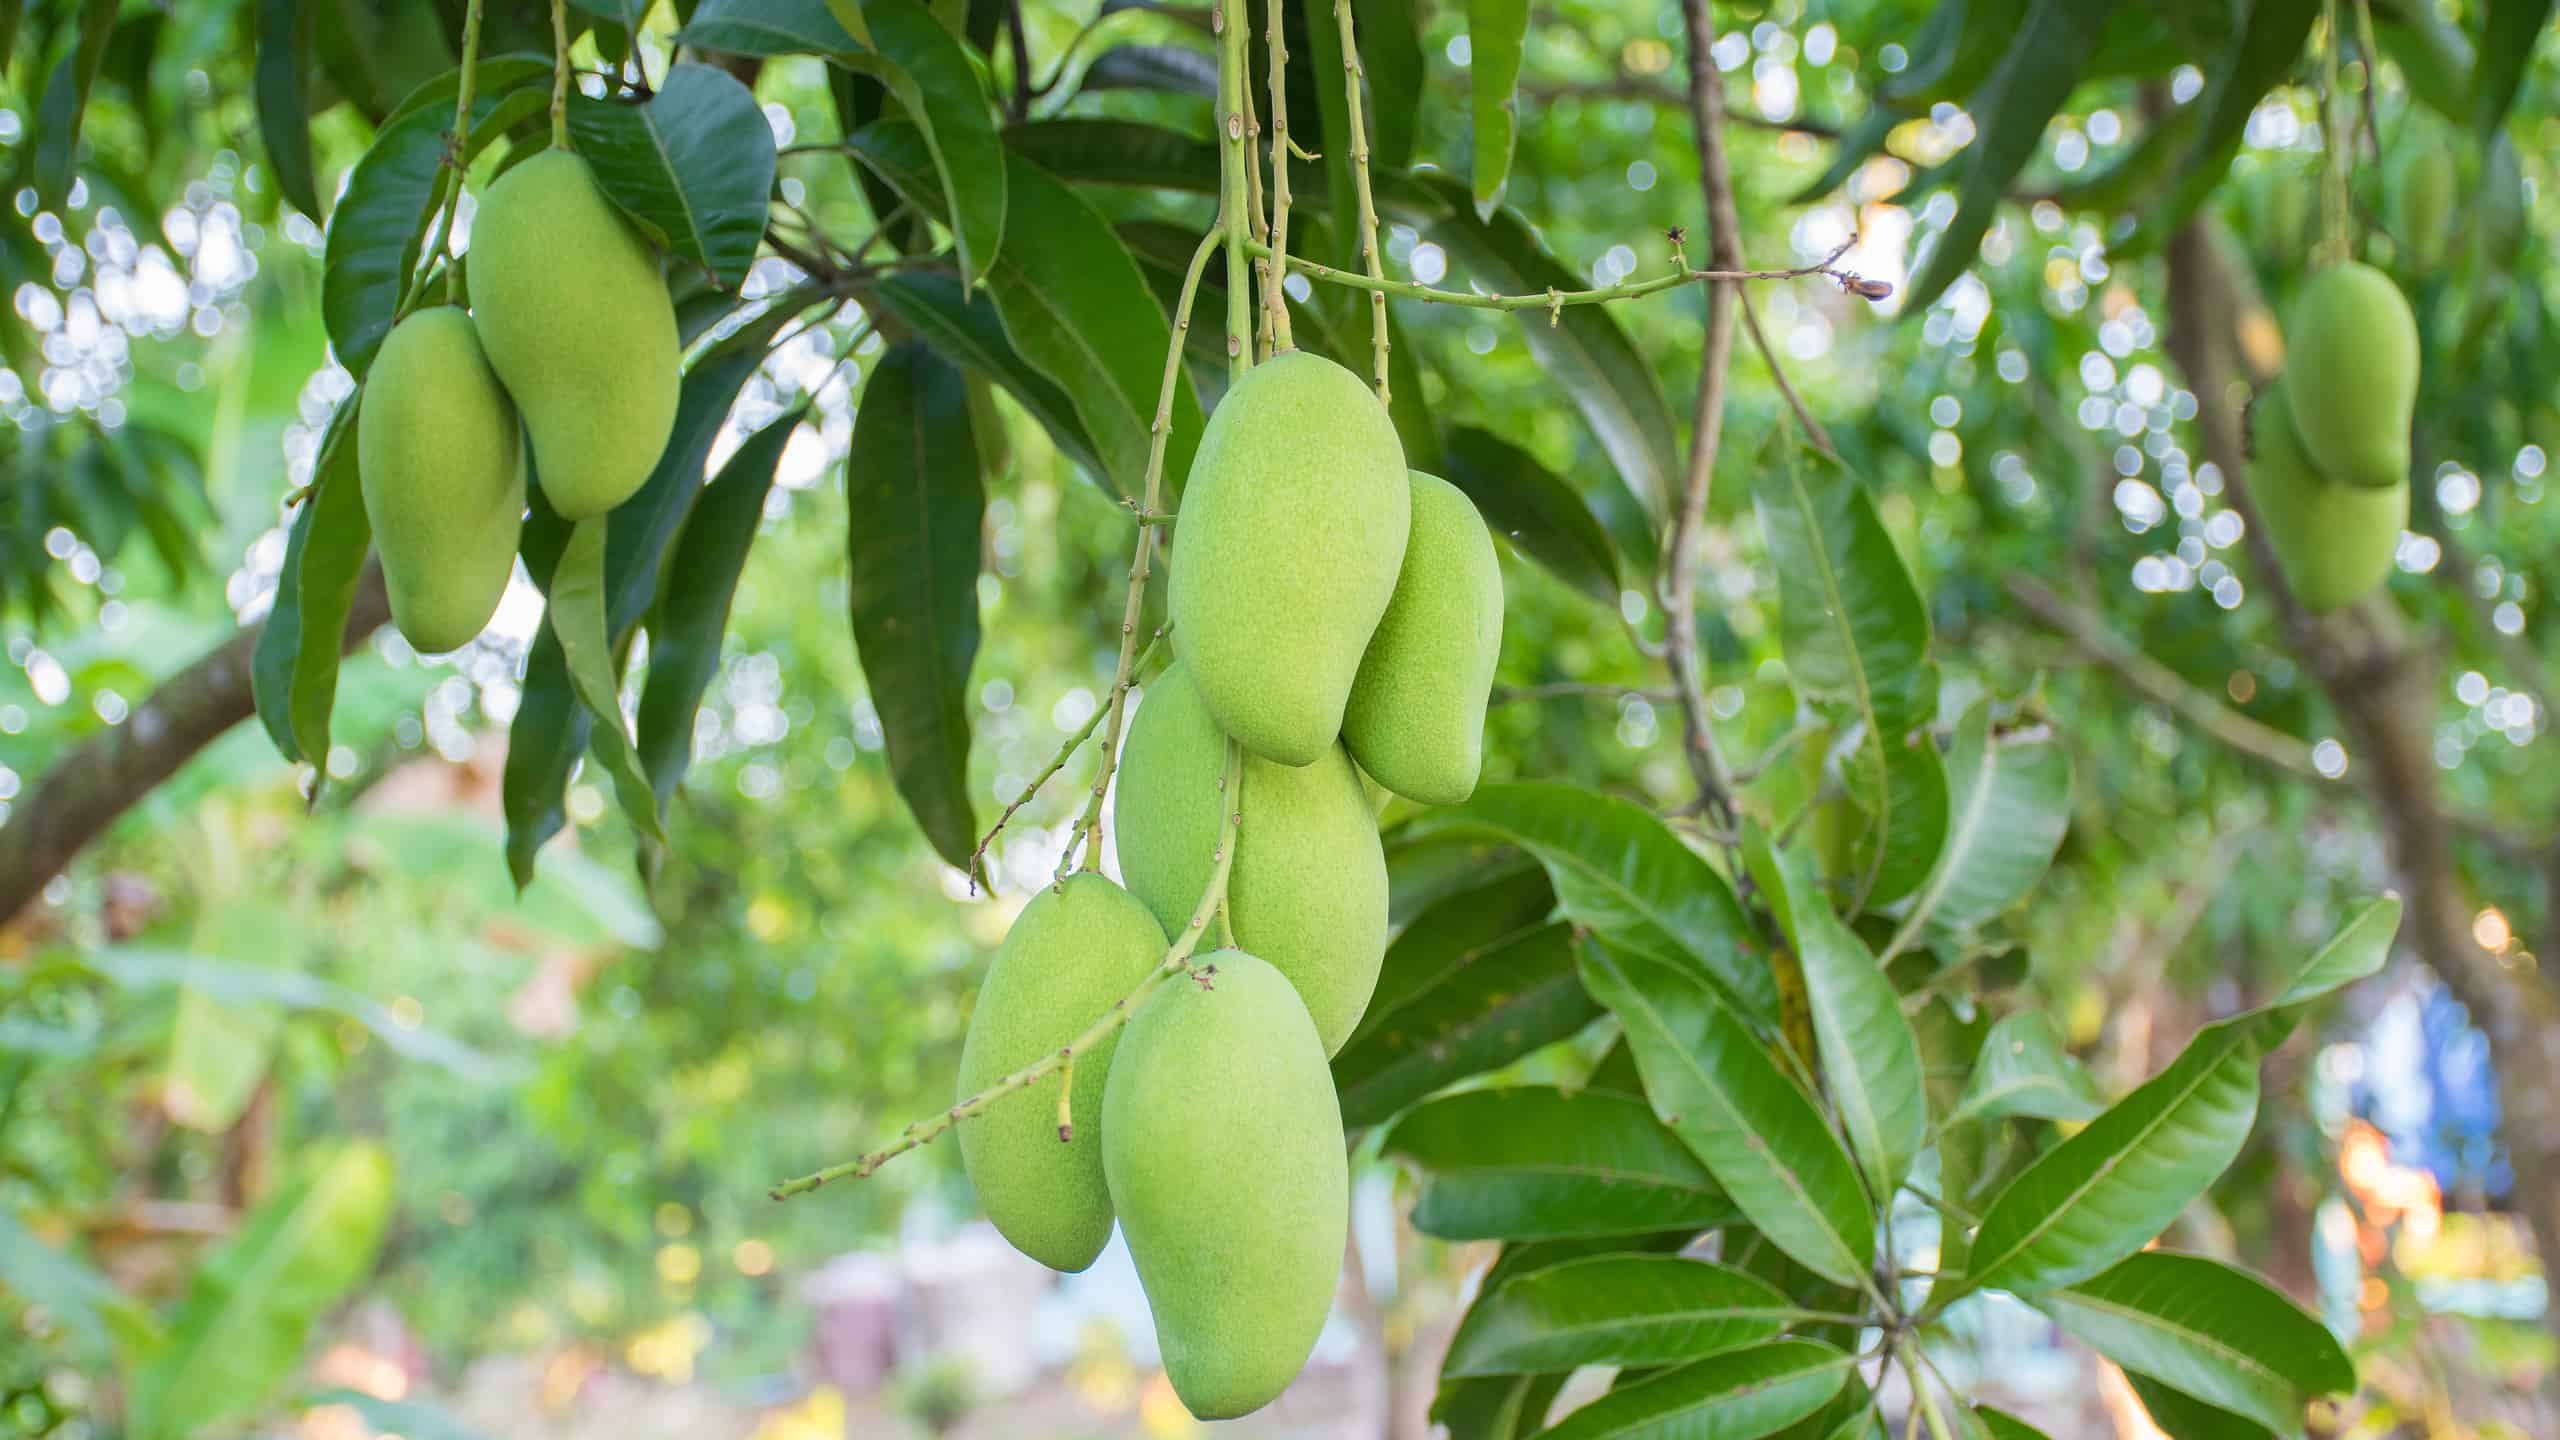 images of mango trees